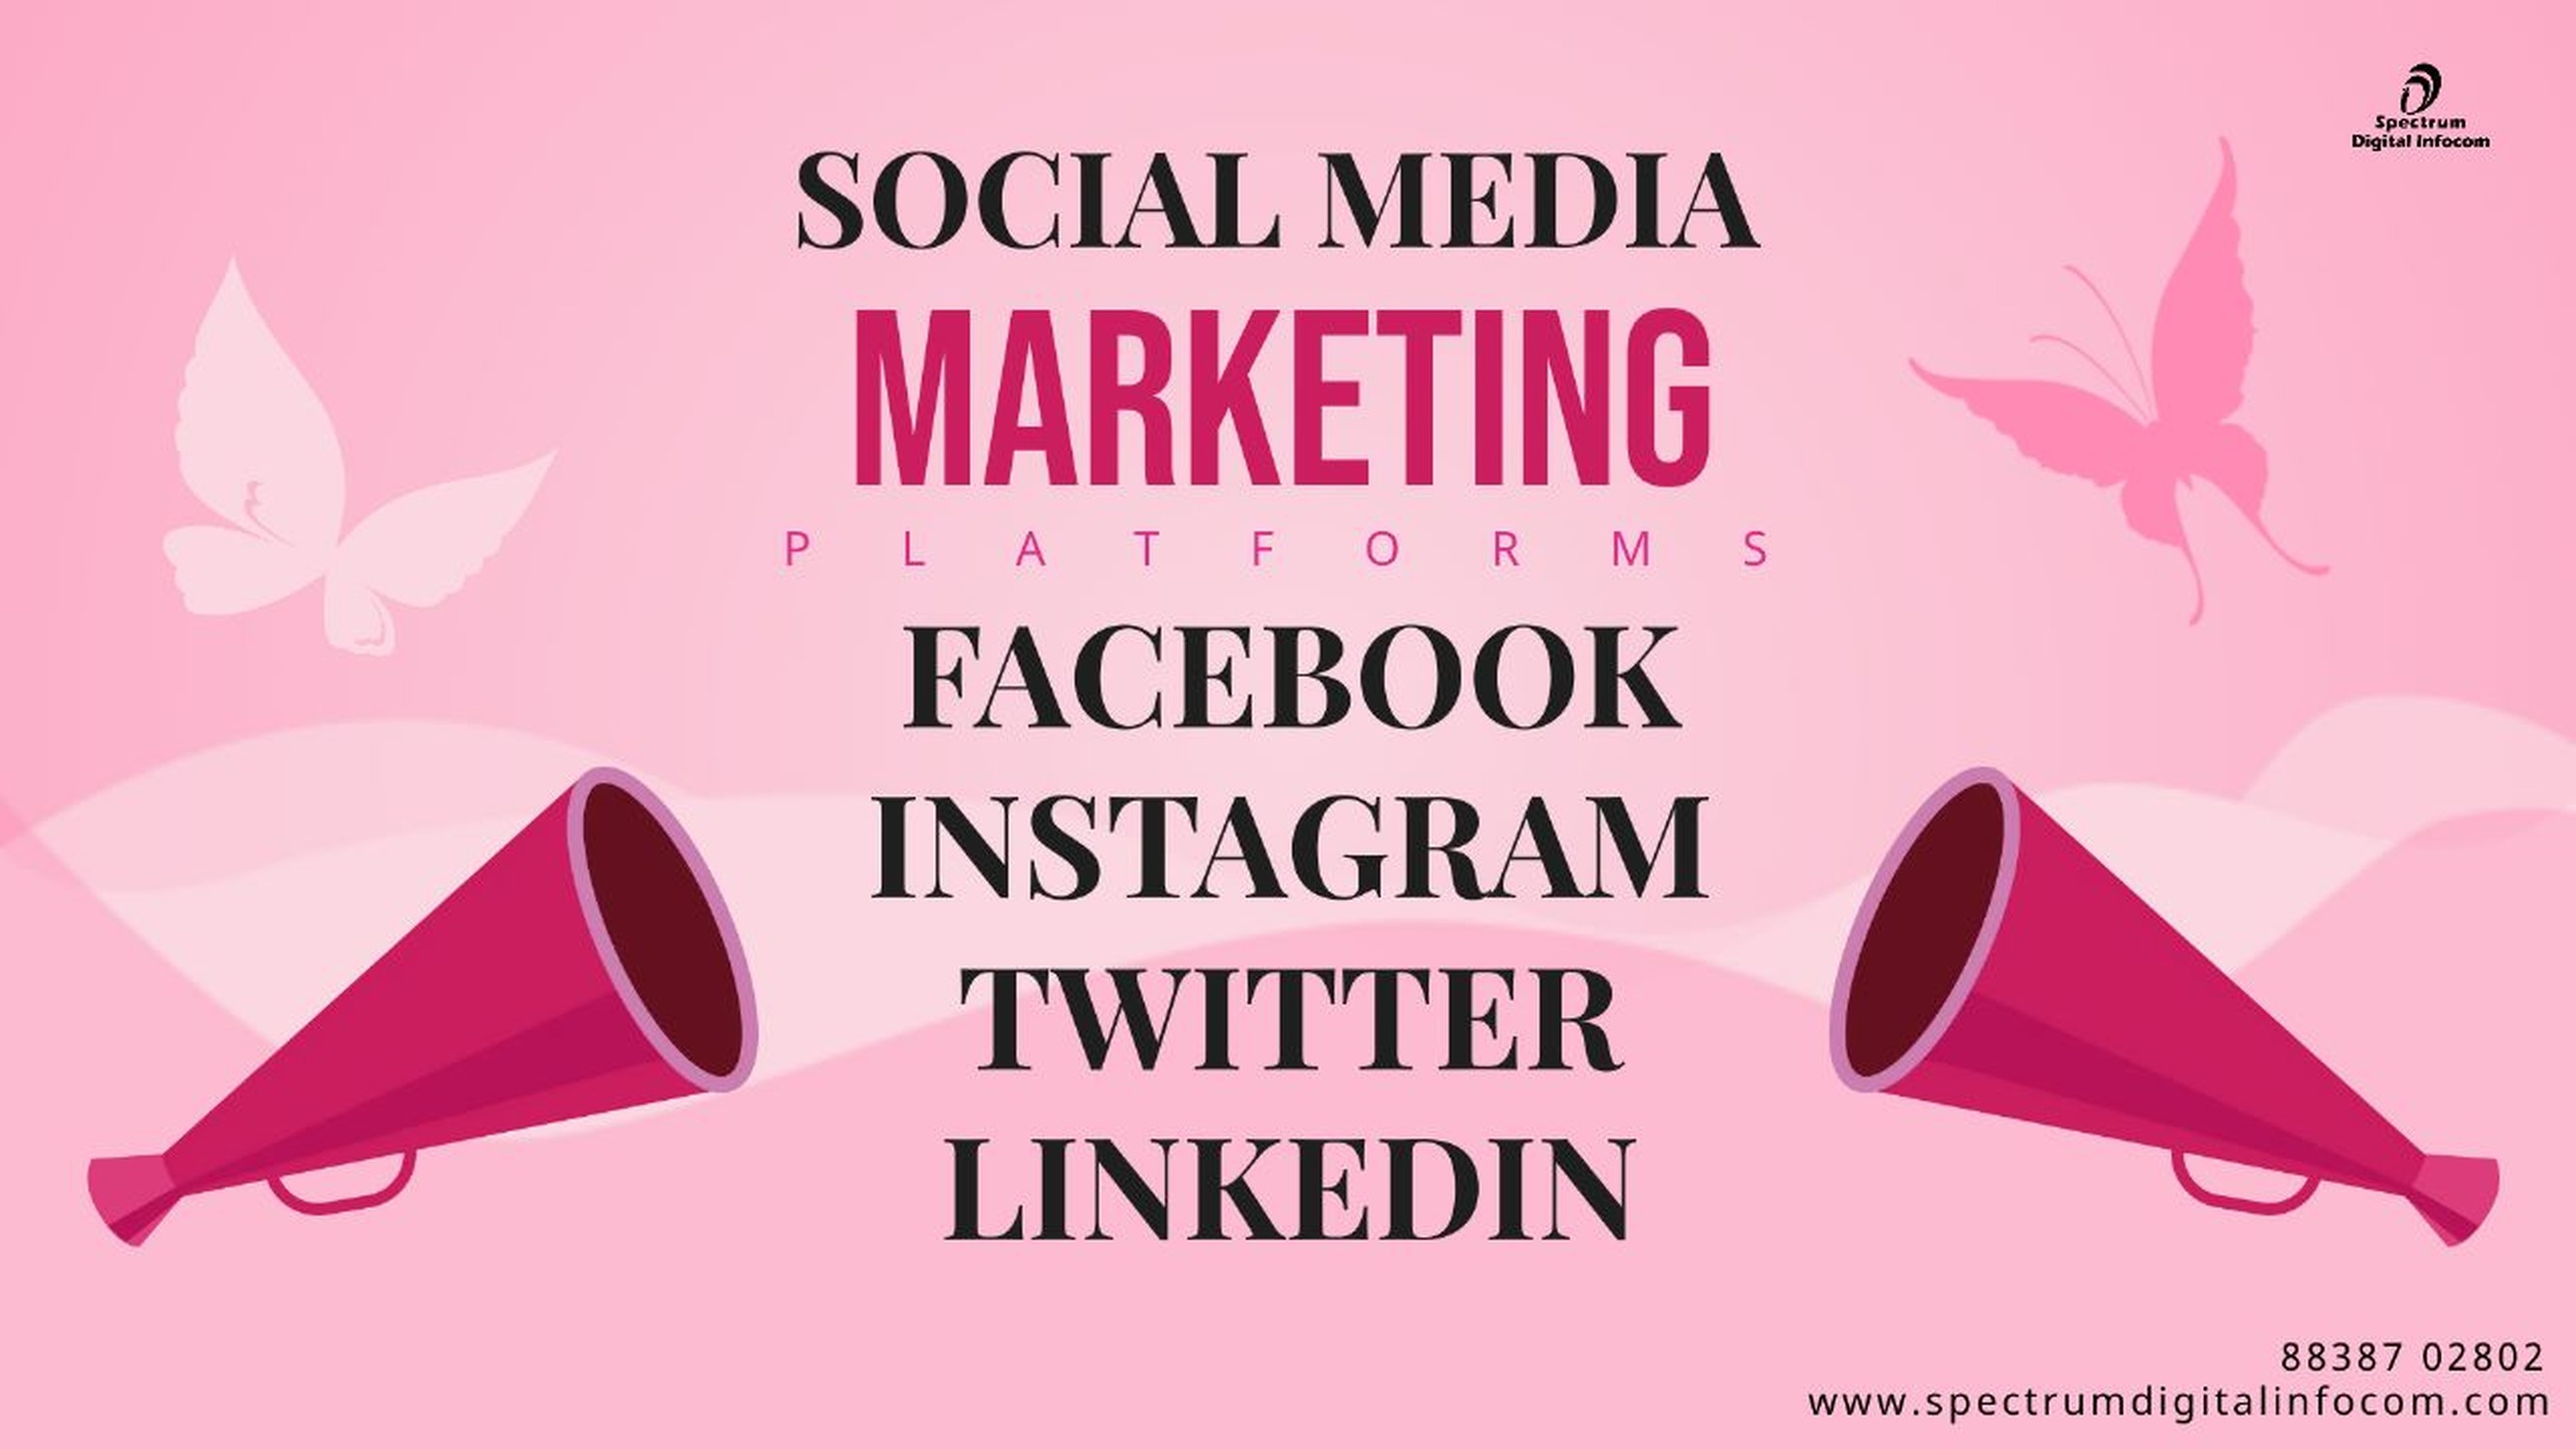 Social media marketing in coimbatore09890, Online Event